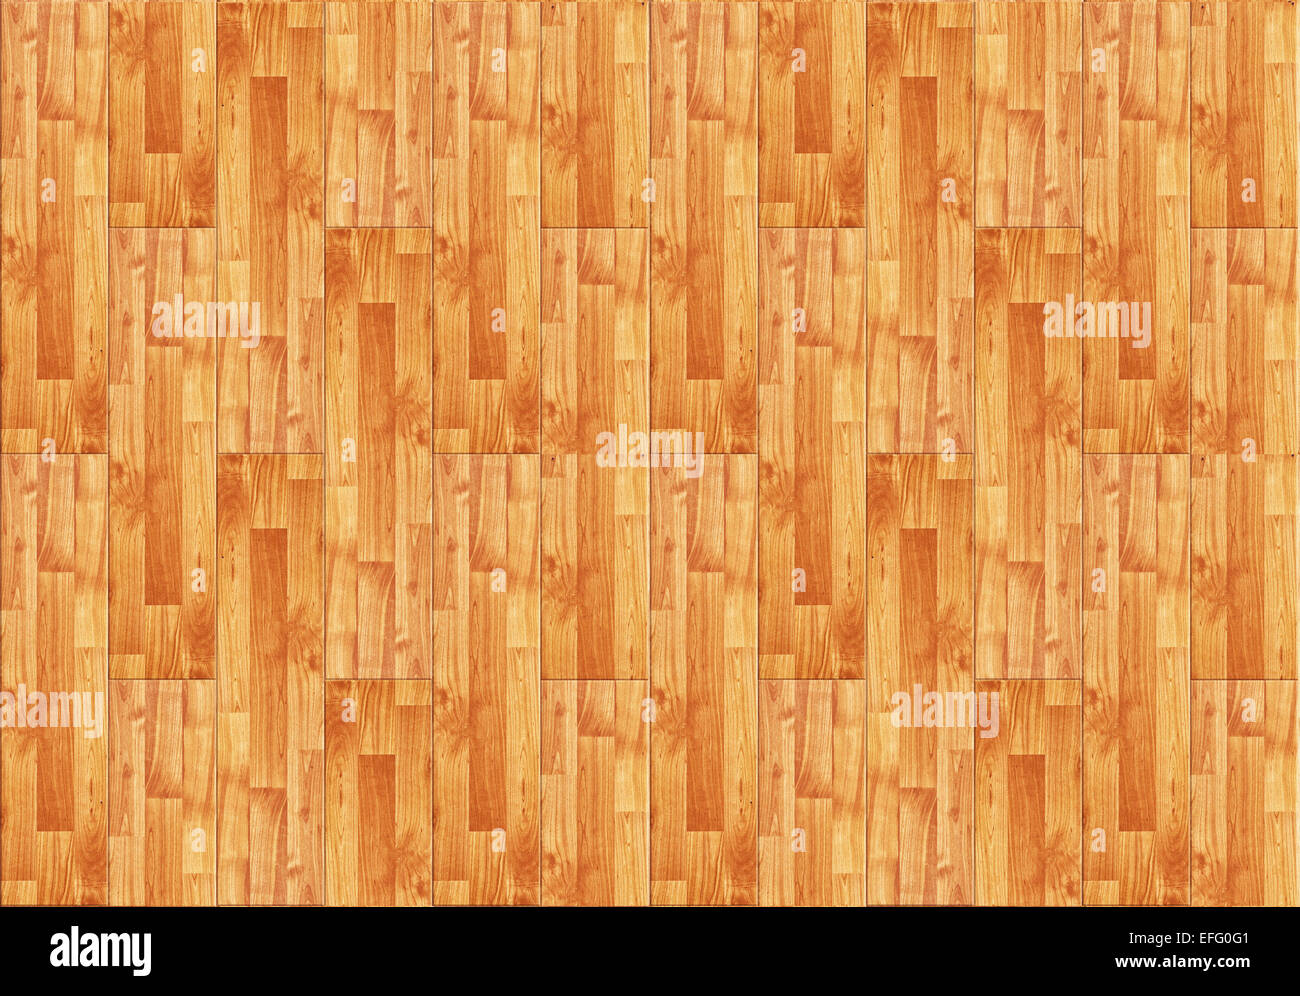 Seamless wood laminated parquet floor texture pattern as interior design background Stock Photo